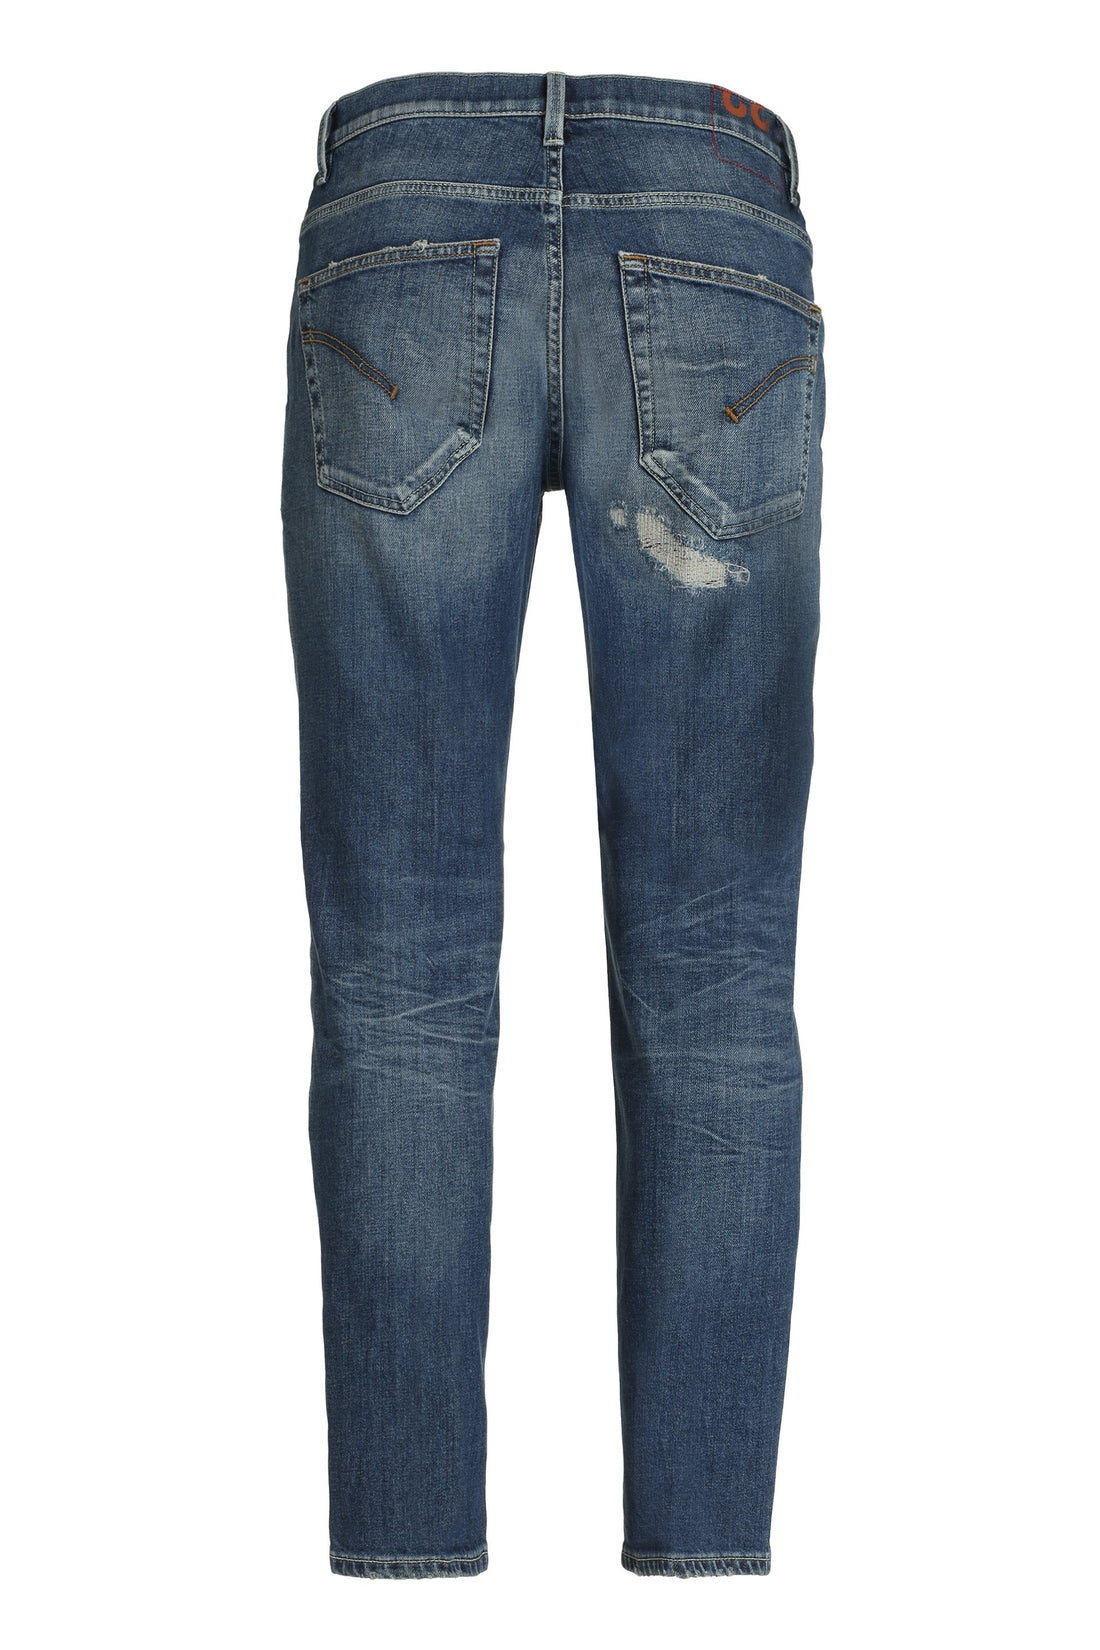 Dondup-OUTLET-SALE-Brighton carrot-fit jeans-ARCHIVIST